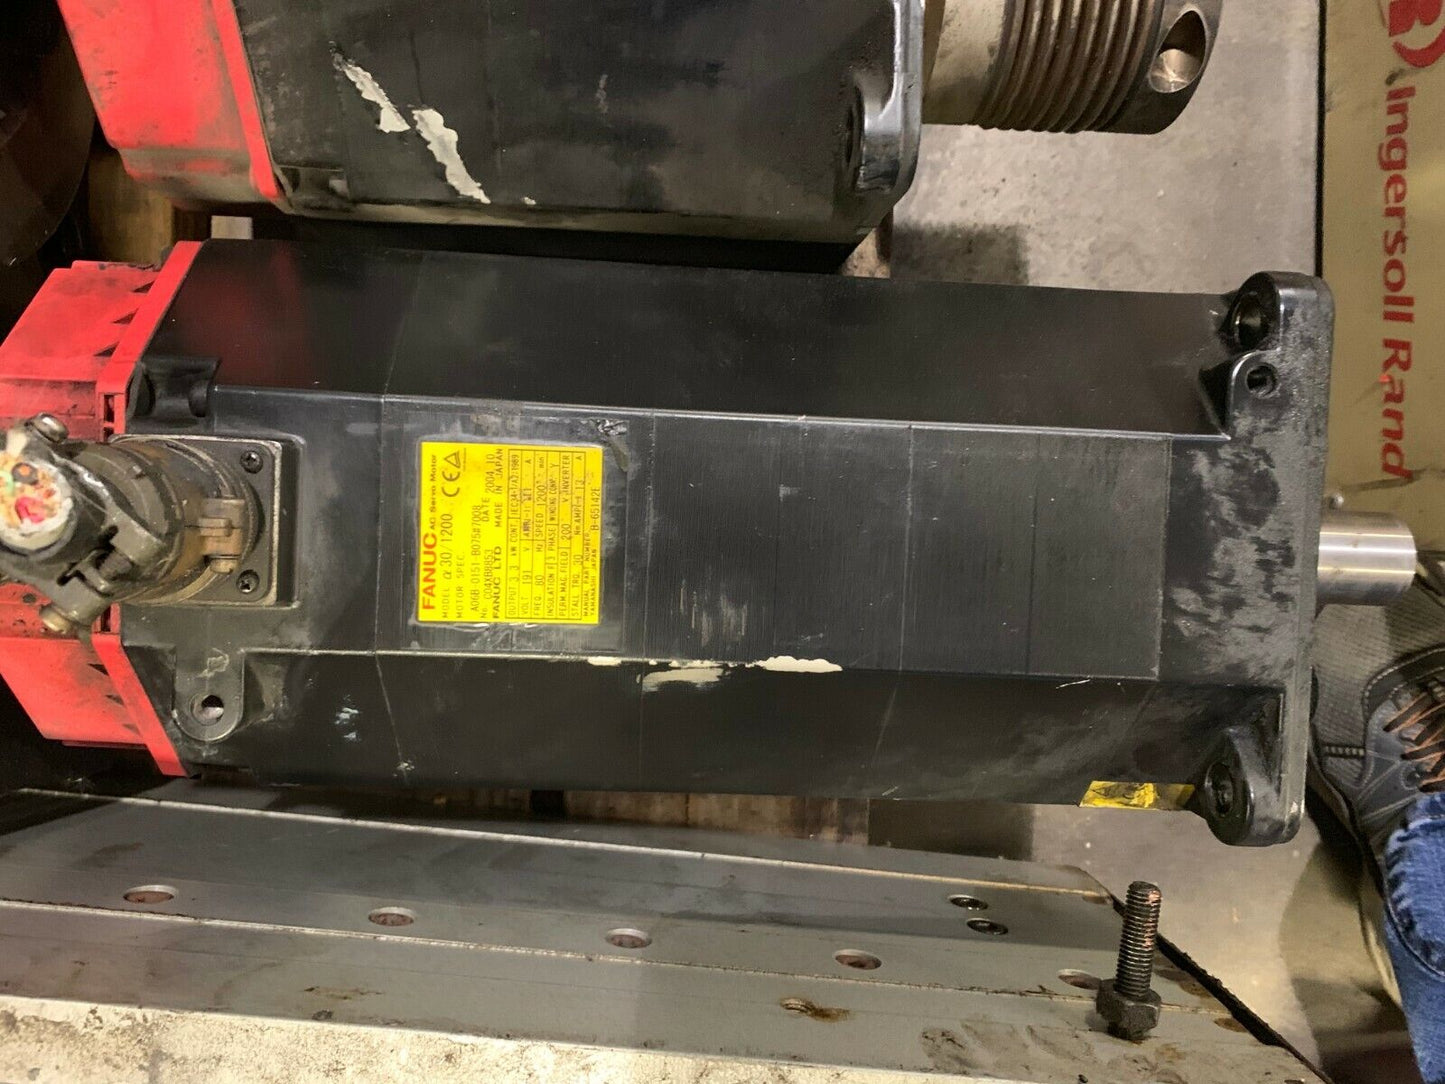 Fanuc Servo Motor A06B-0151-B075 #7008 Removed from Cincinnati Laser